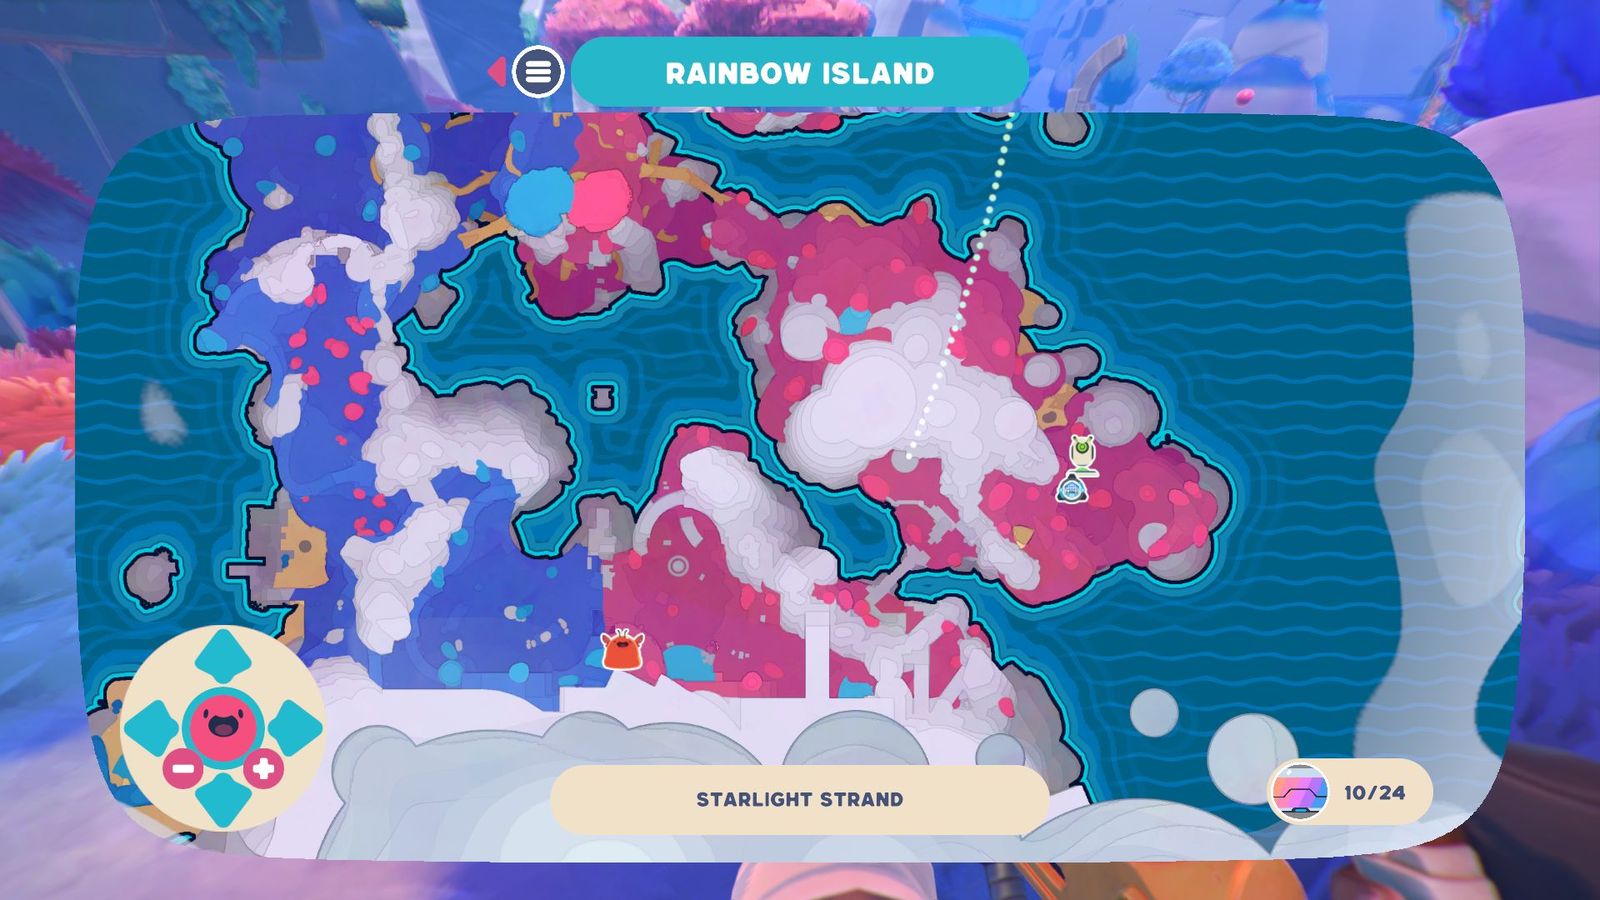 Starlight Strand map